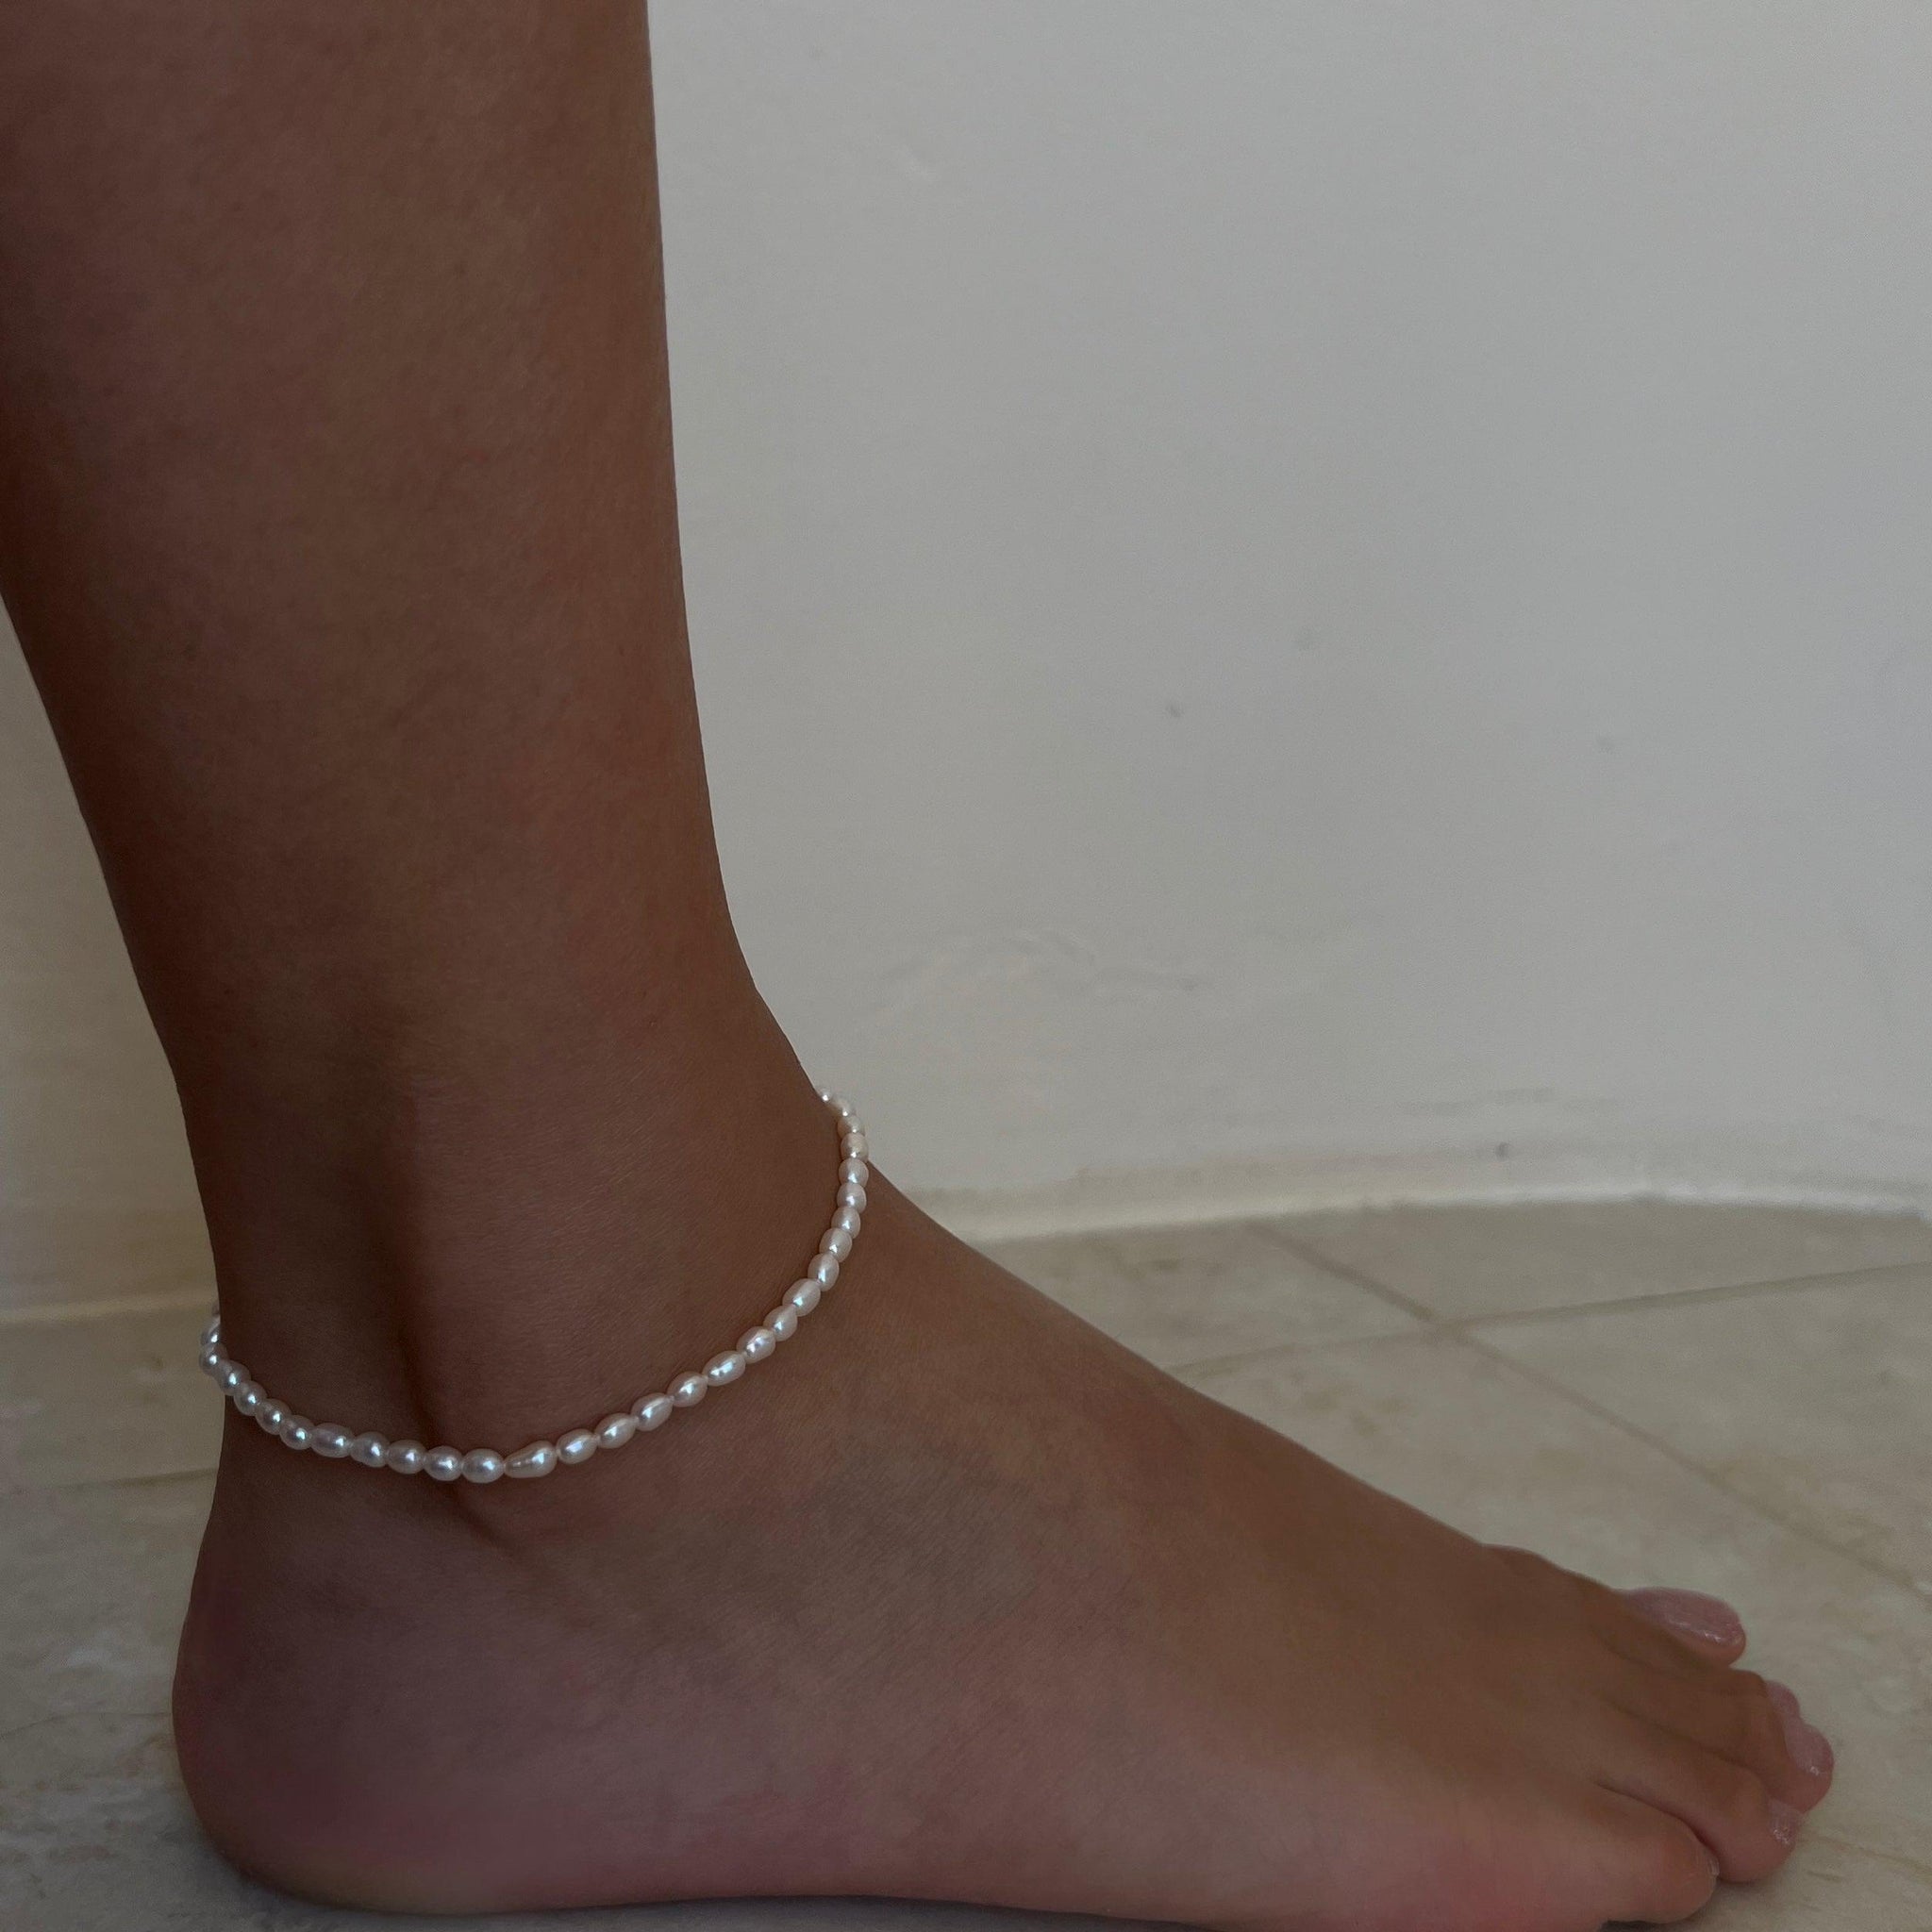 Natural Pearl Anklet